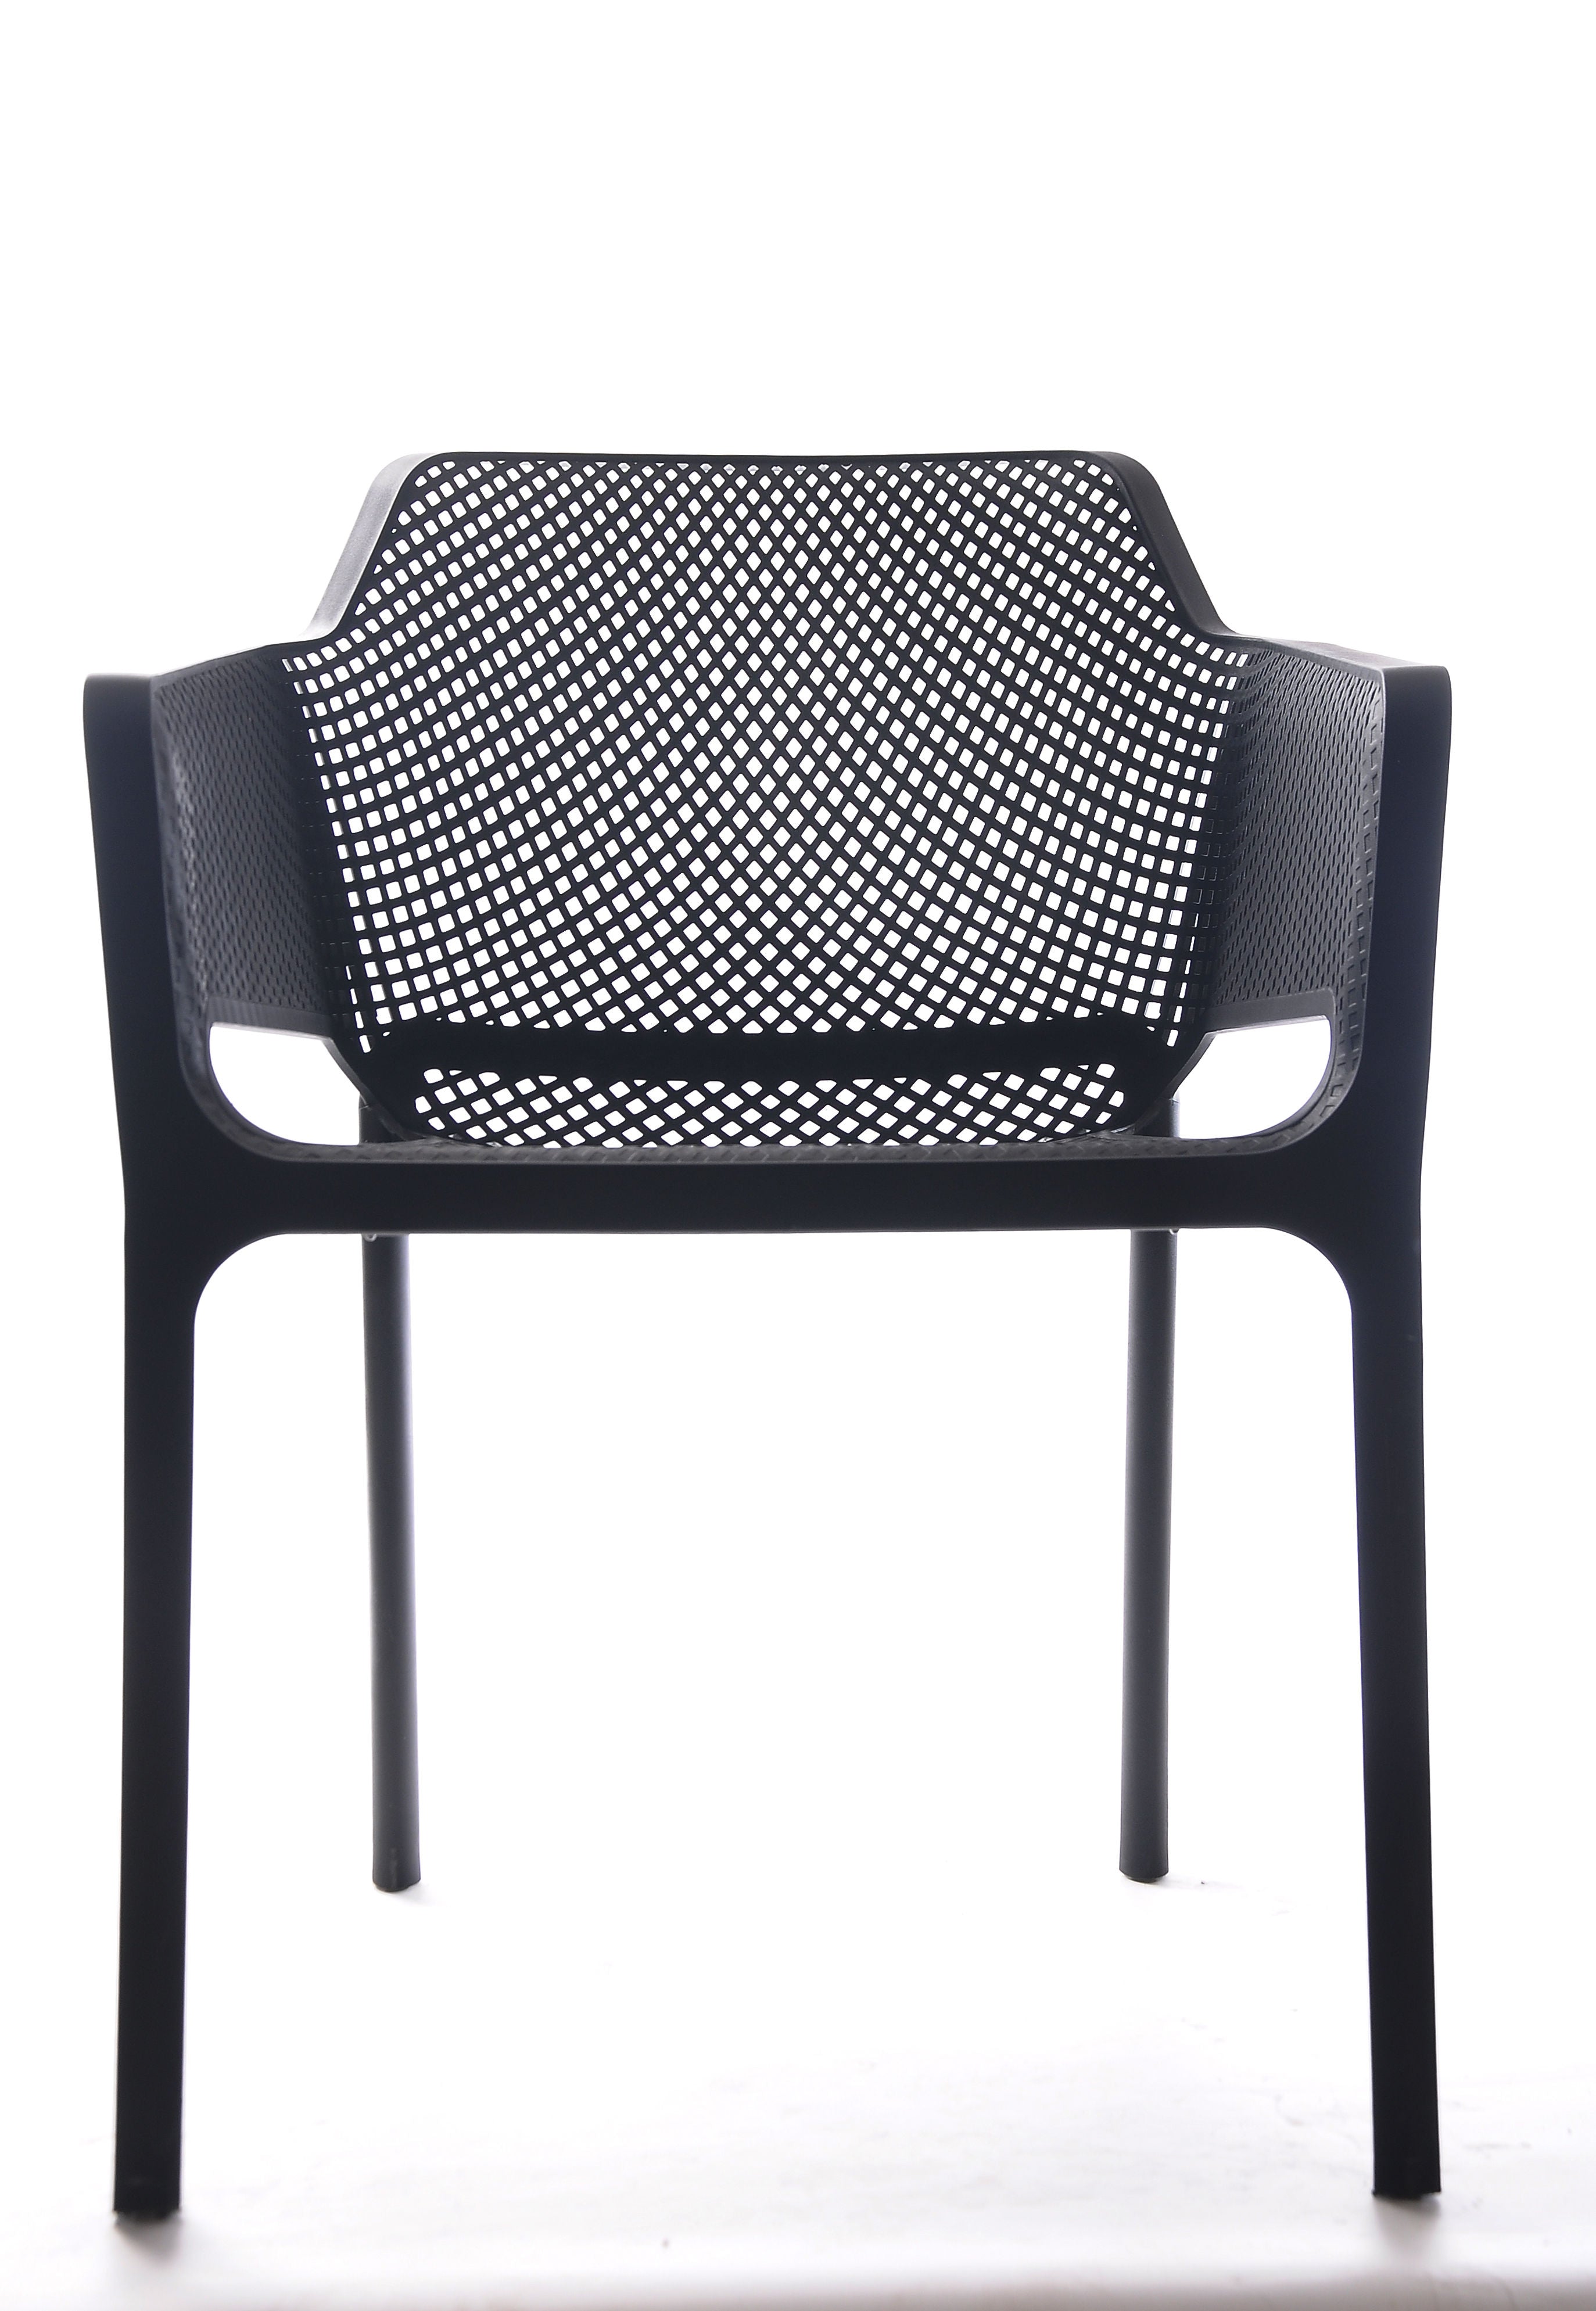 PatioZone Plastic Resin Chair with Hole Detail (PZ-MC23-020N) - Black